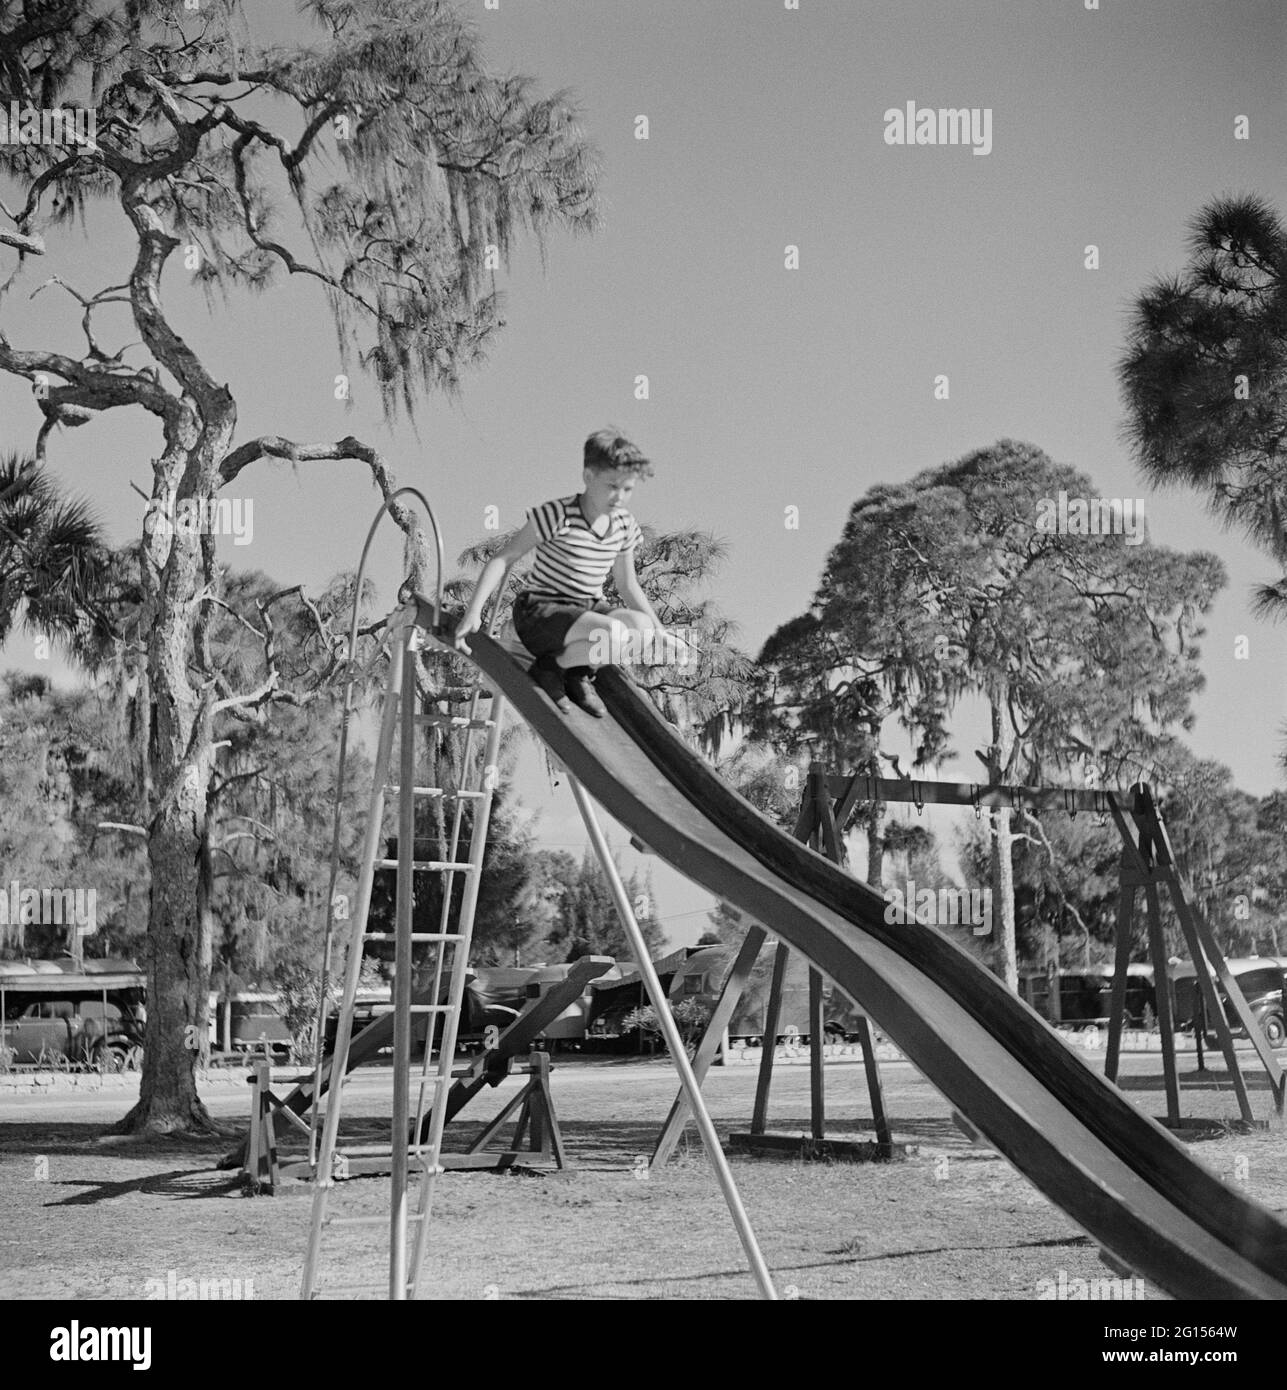 Boy on Playground Slide, Sarasota Trailer Park, Sarasota, Florida, USA, Marion Post Wolcott, U.S. Farm Security Administration, January 1941 Stock Photo